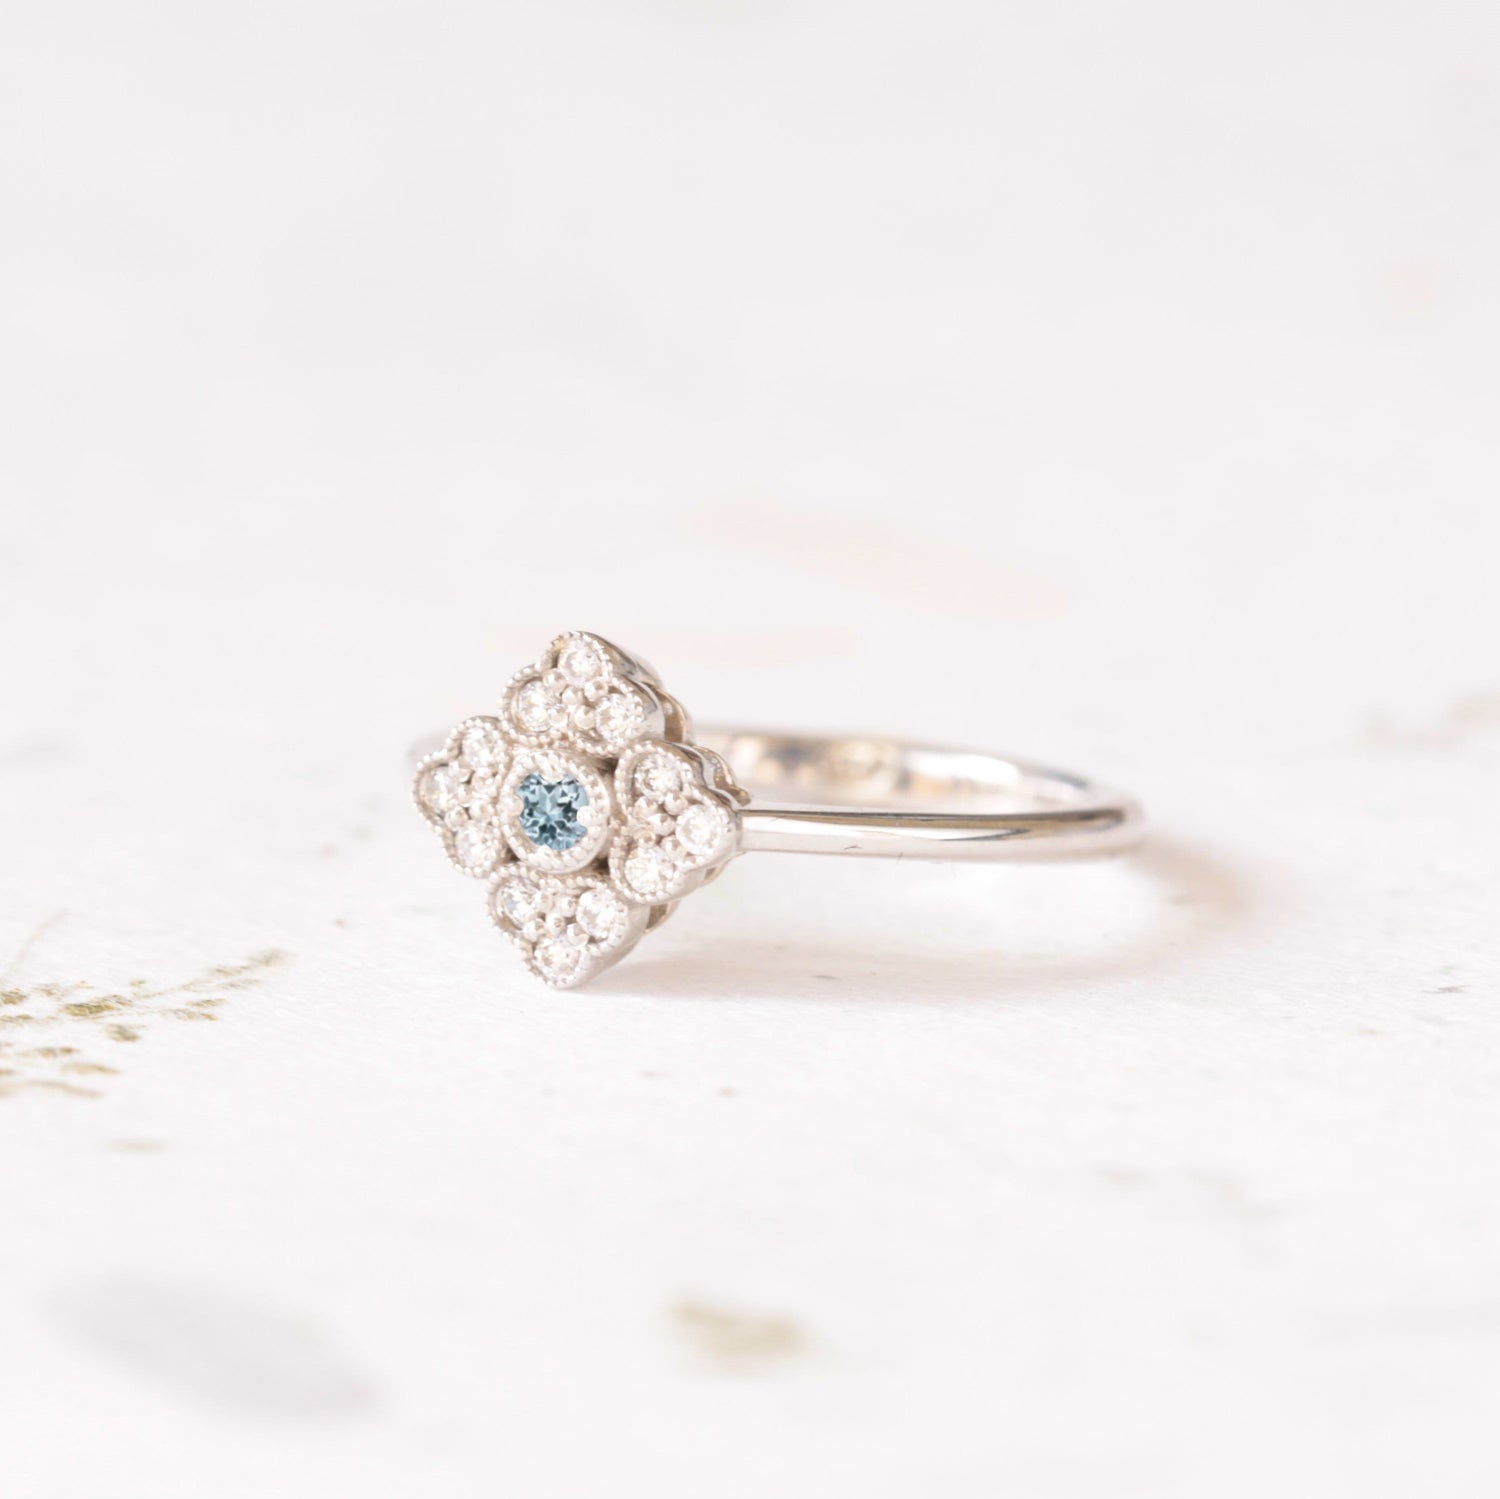 Antique style Aquamarine engagement ring - Vinny & Charles